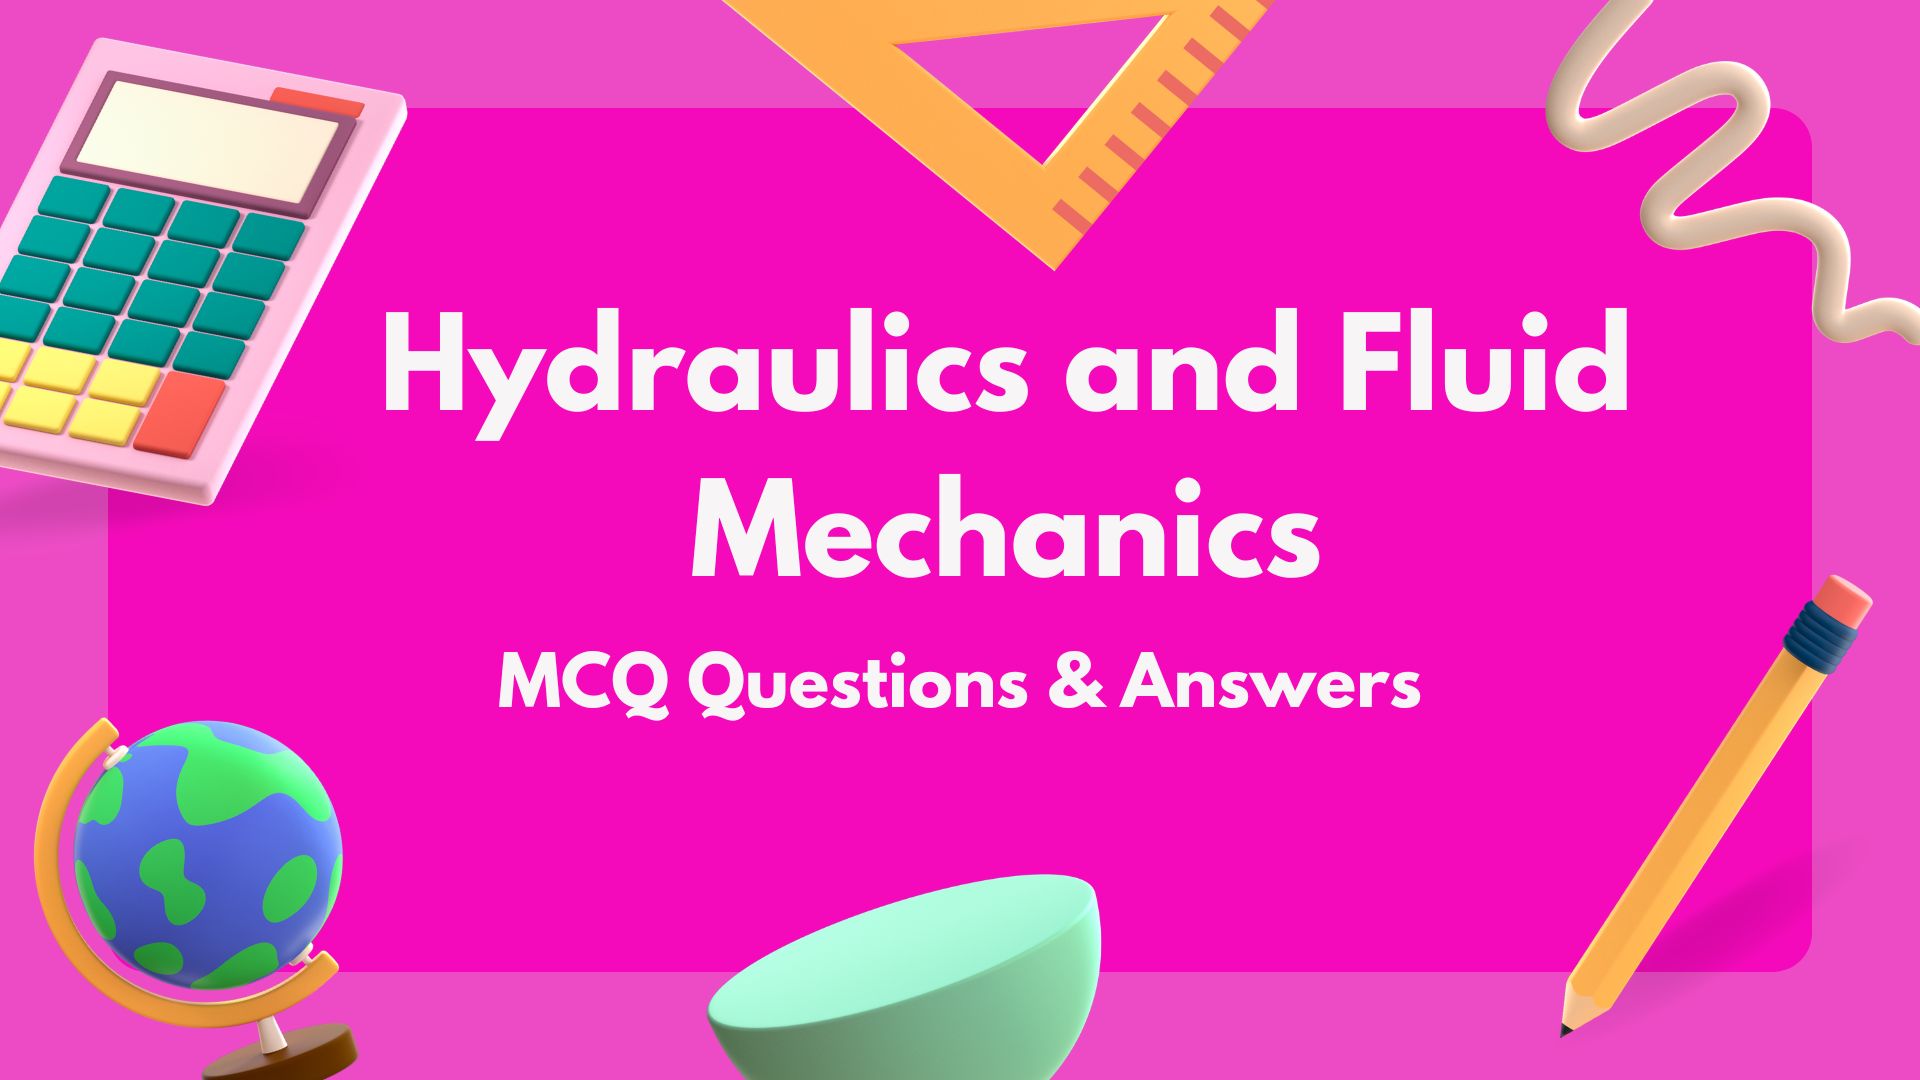 Hydraulics and Fluid Mechanics MCQ Questions & Answers